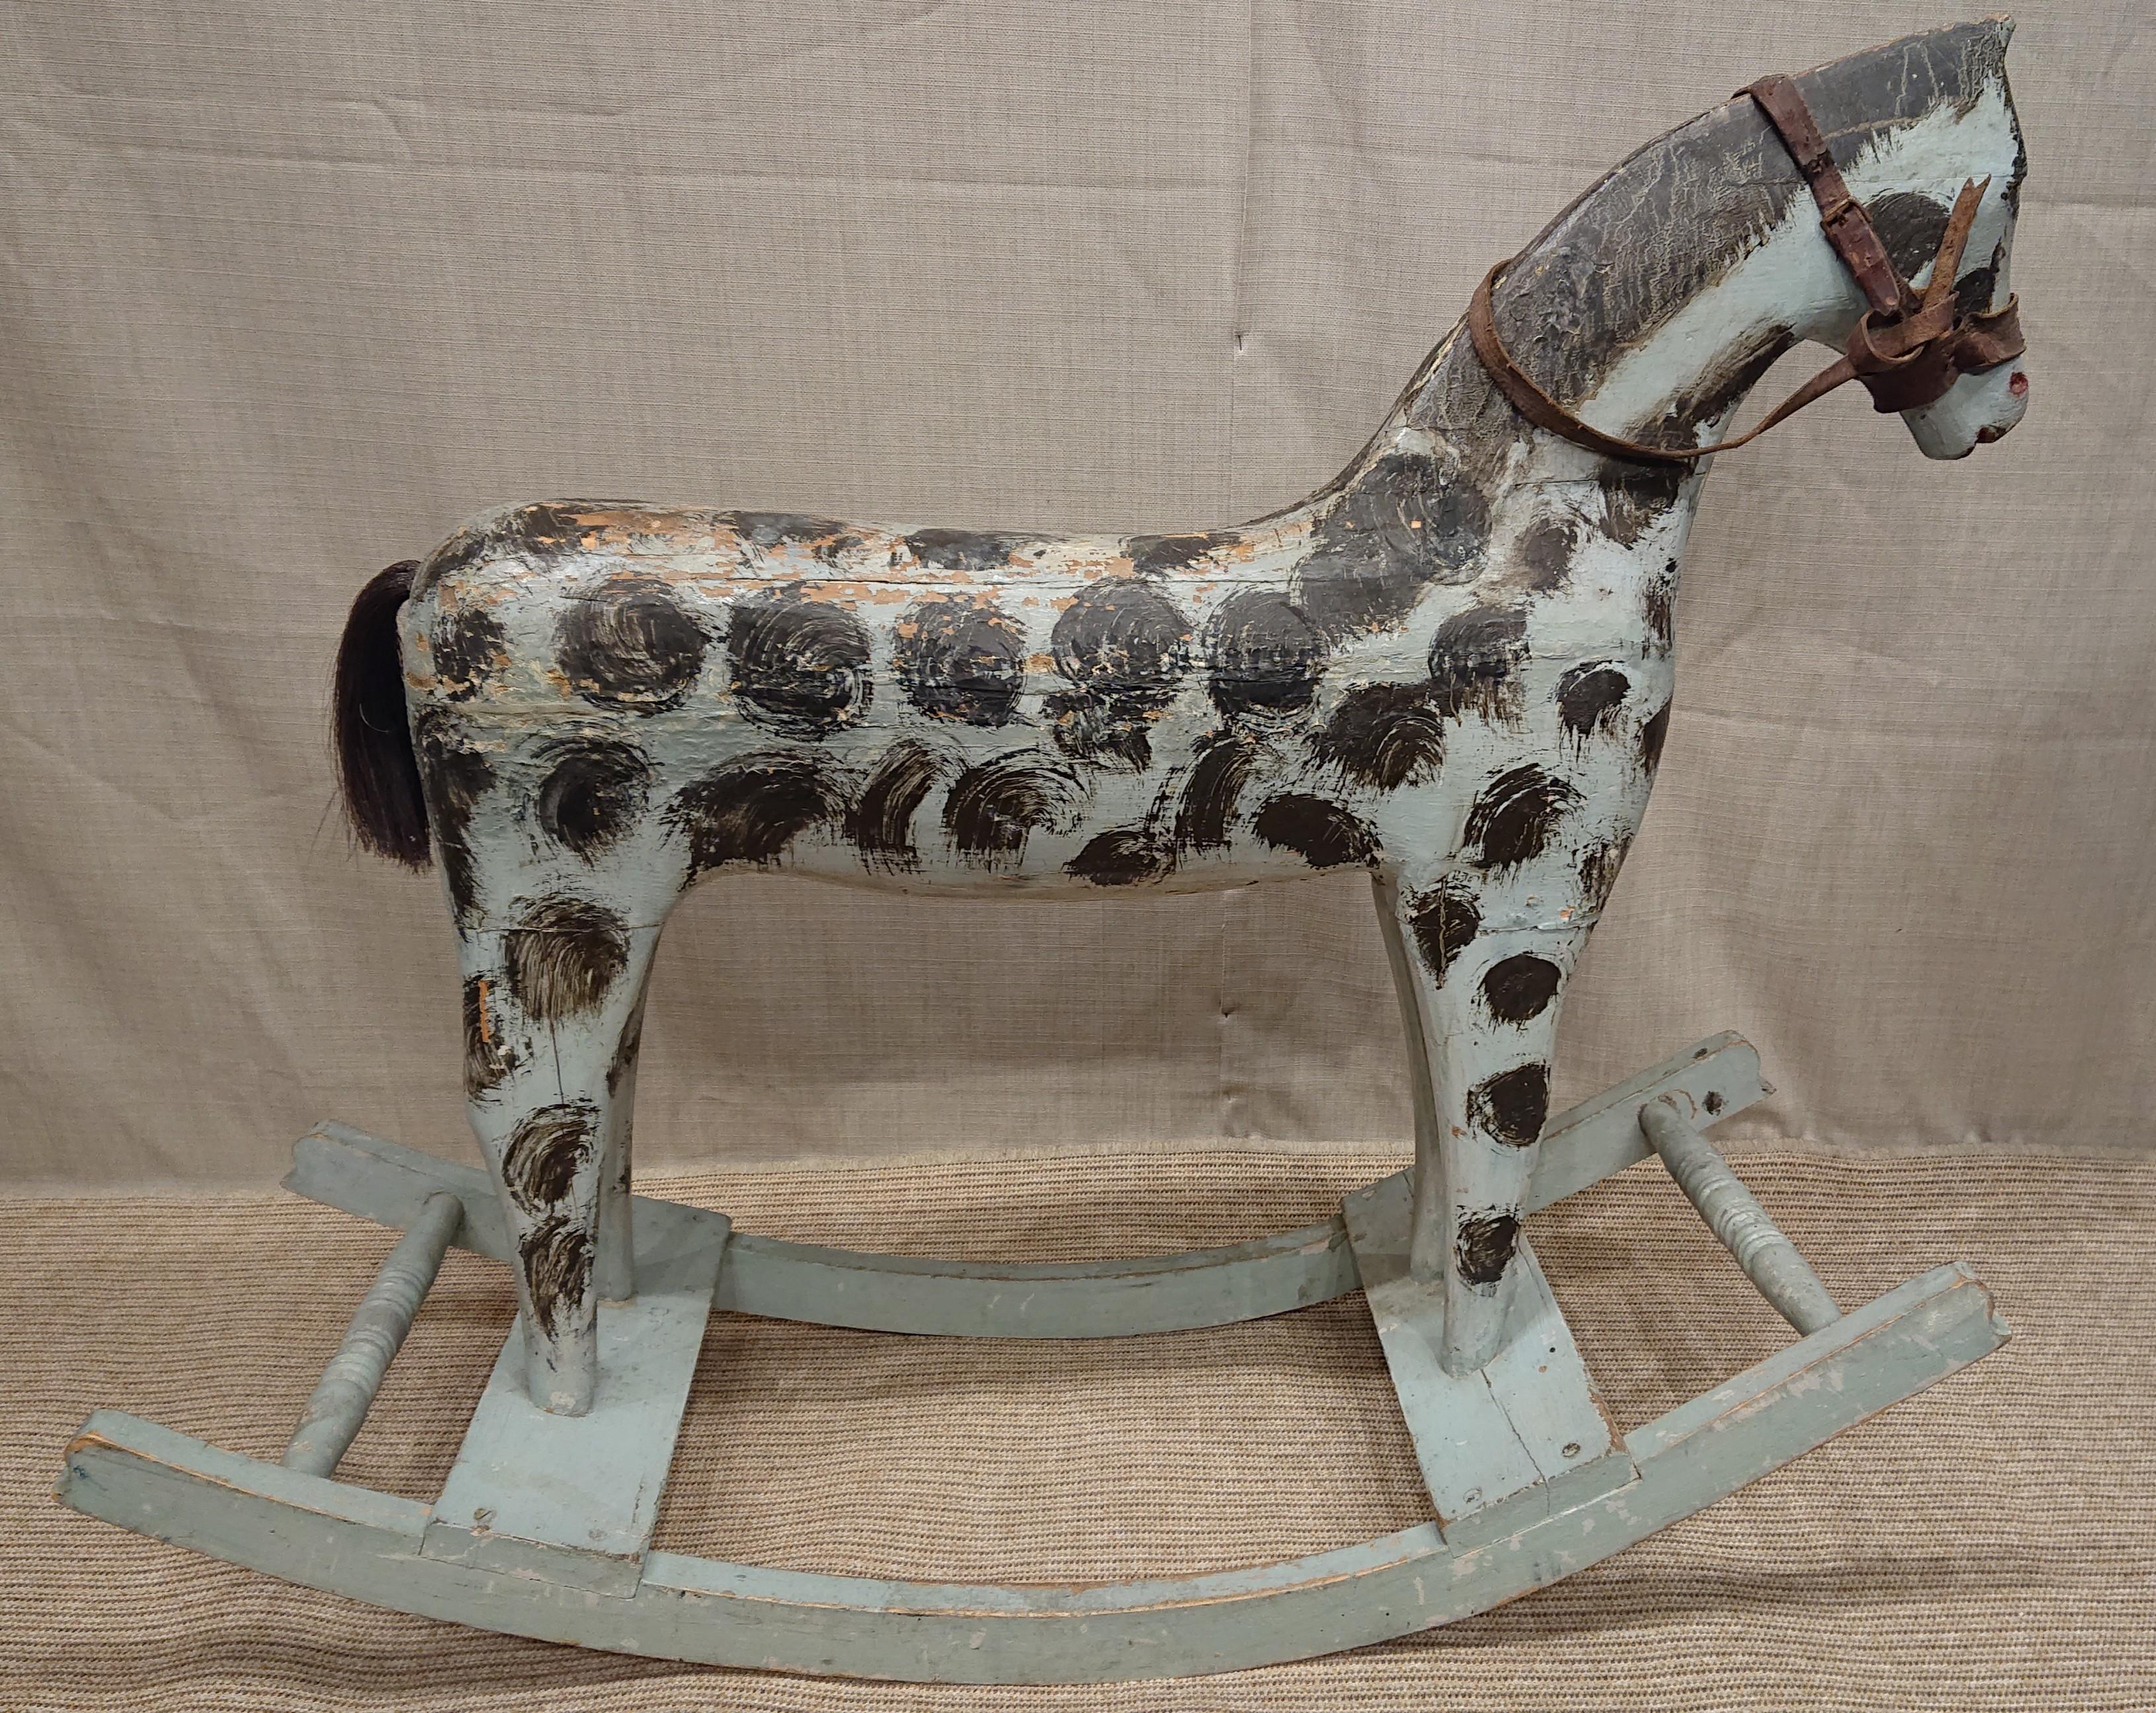 19th Century Swedish Folk Art Antique Rocking Horse Toy All Original For Sale 7